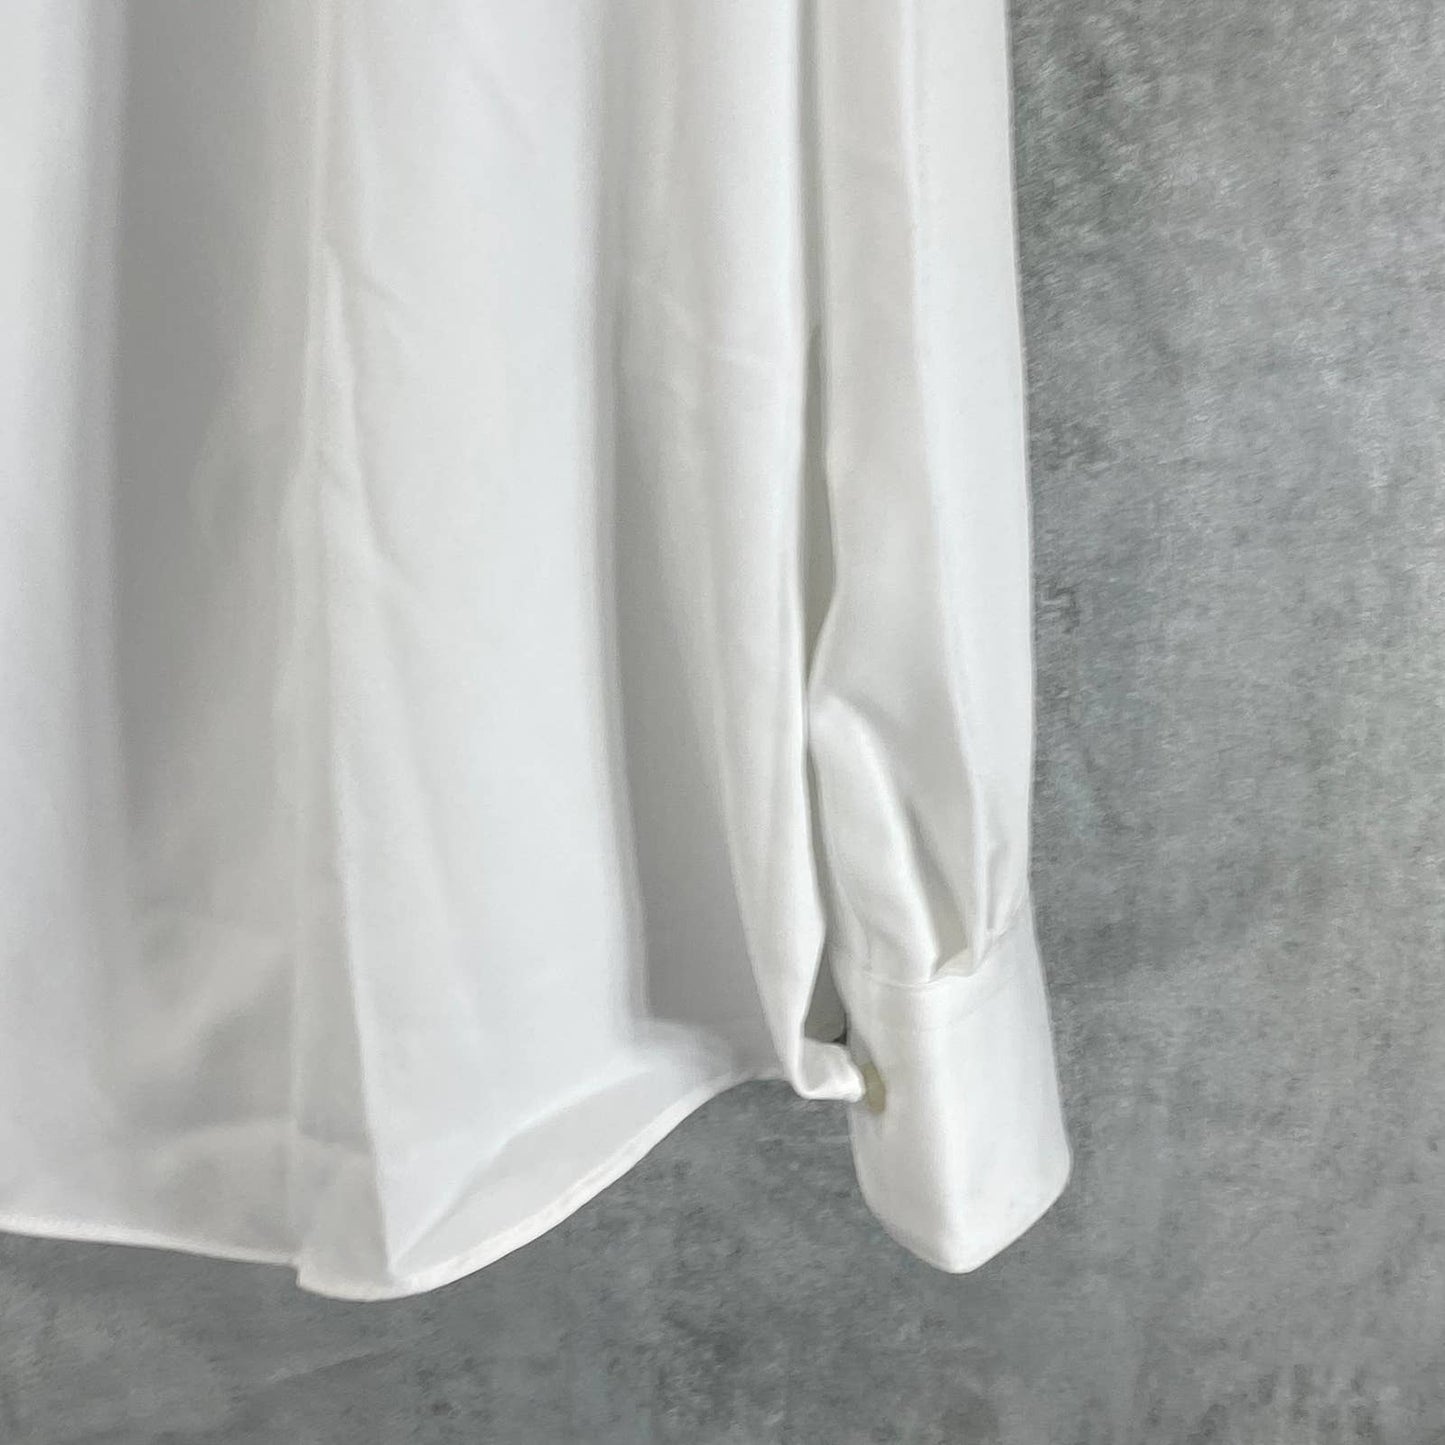 ALFANI Men's White Slim-Fit 4-Way Stretch Solid Dress Shirt SZ XL(17/17.5 36-37)